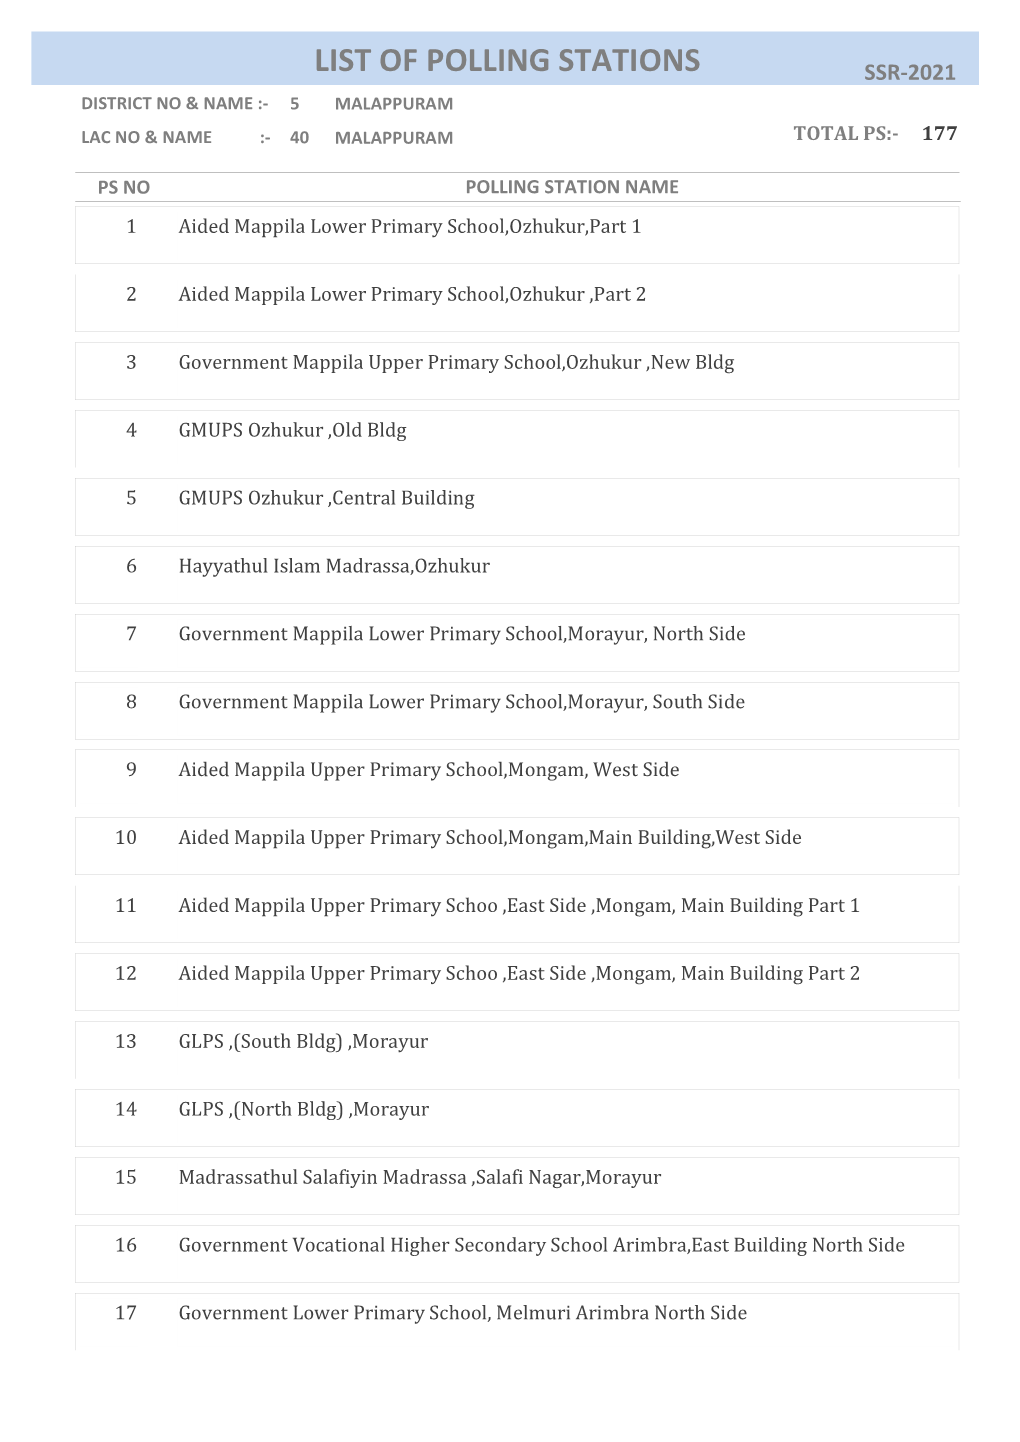 List of Polling Stations Ssr-2021 District No & Name :- 5 Malappuram Lac No & Name :- 40 Malappuram Total Ps:- 177